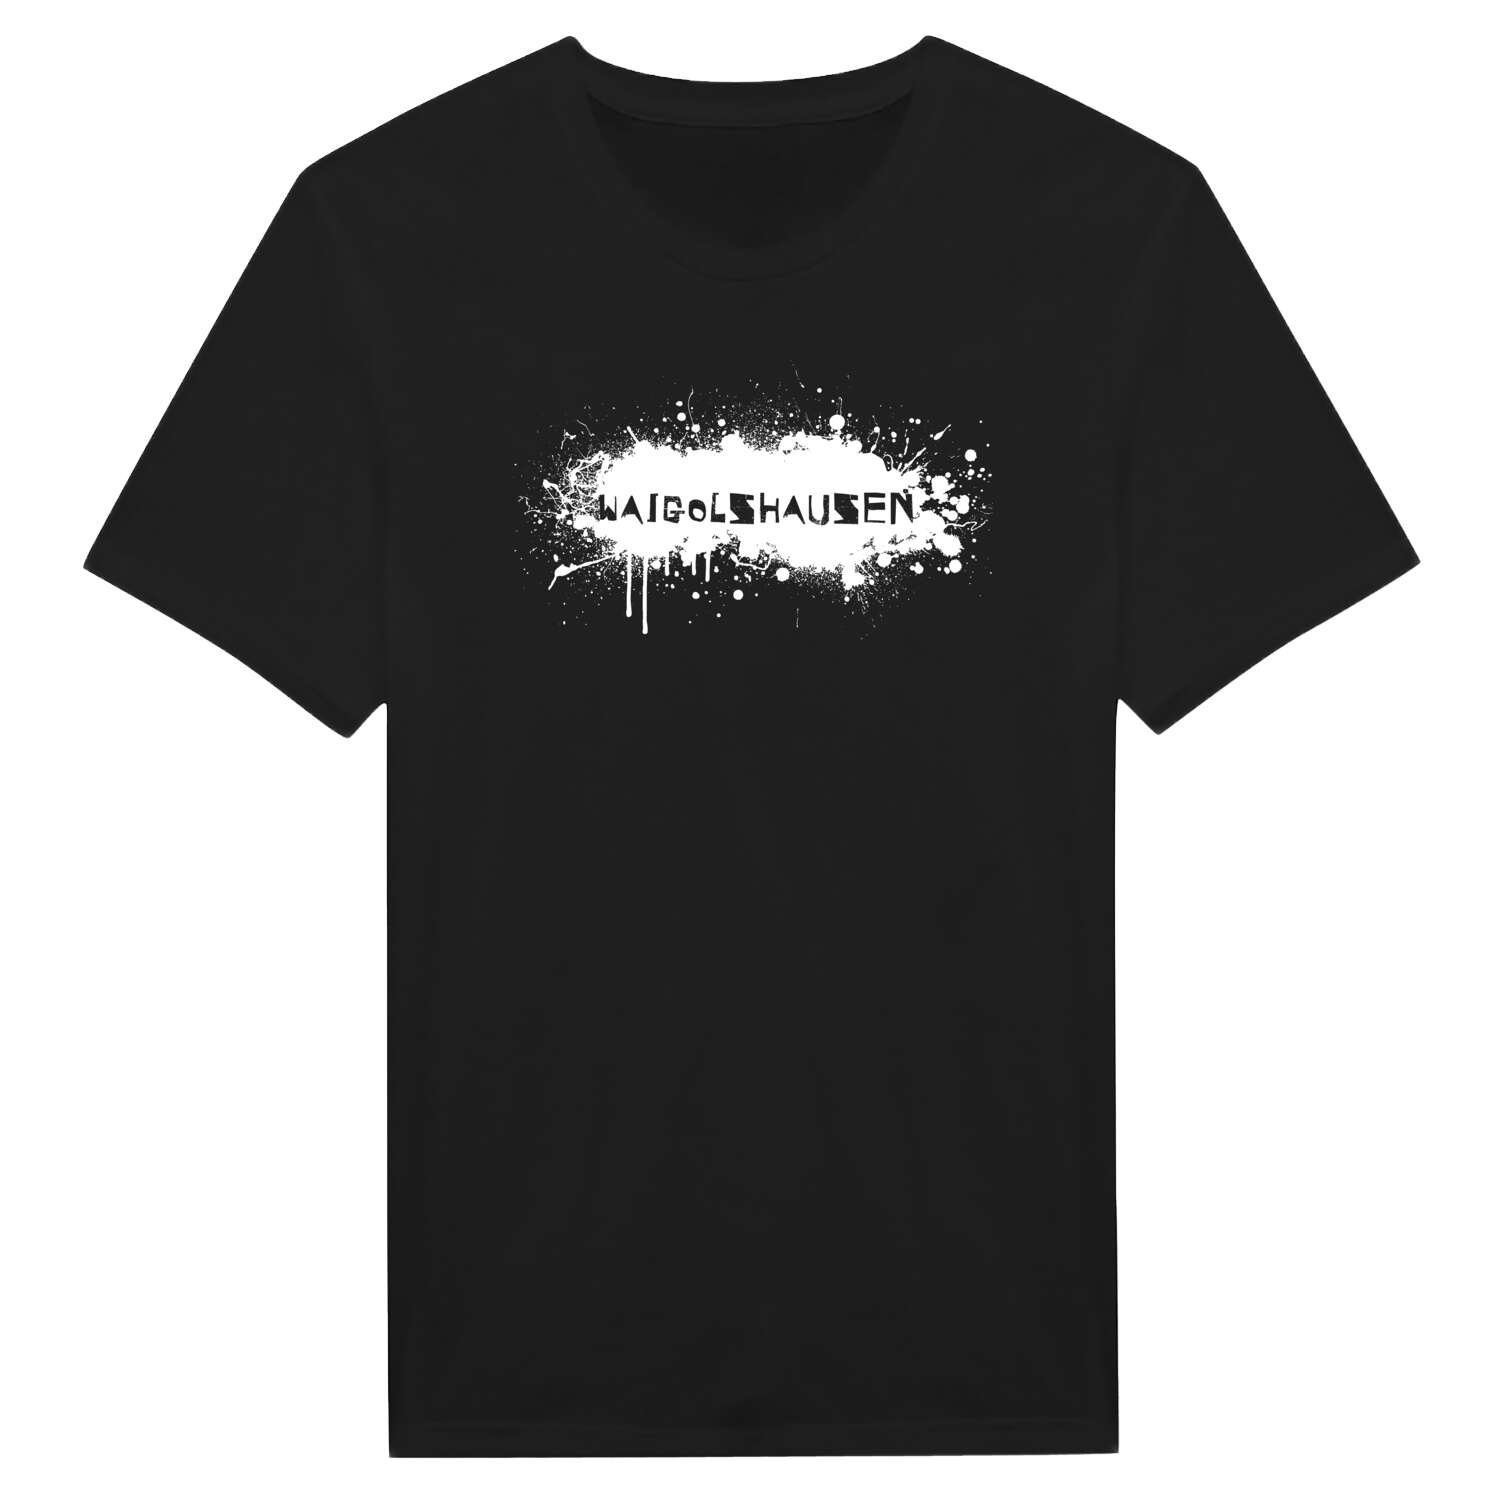 Waigolshausen T-Shirt »Paint Splash Punk«